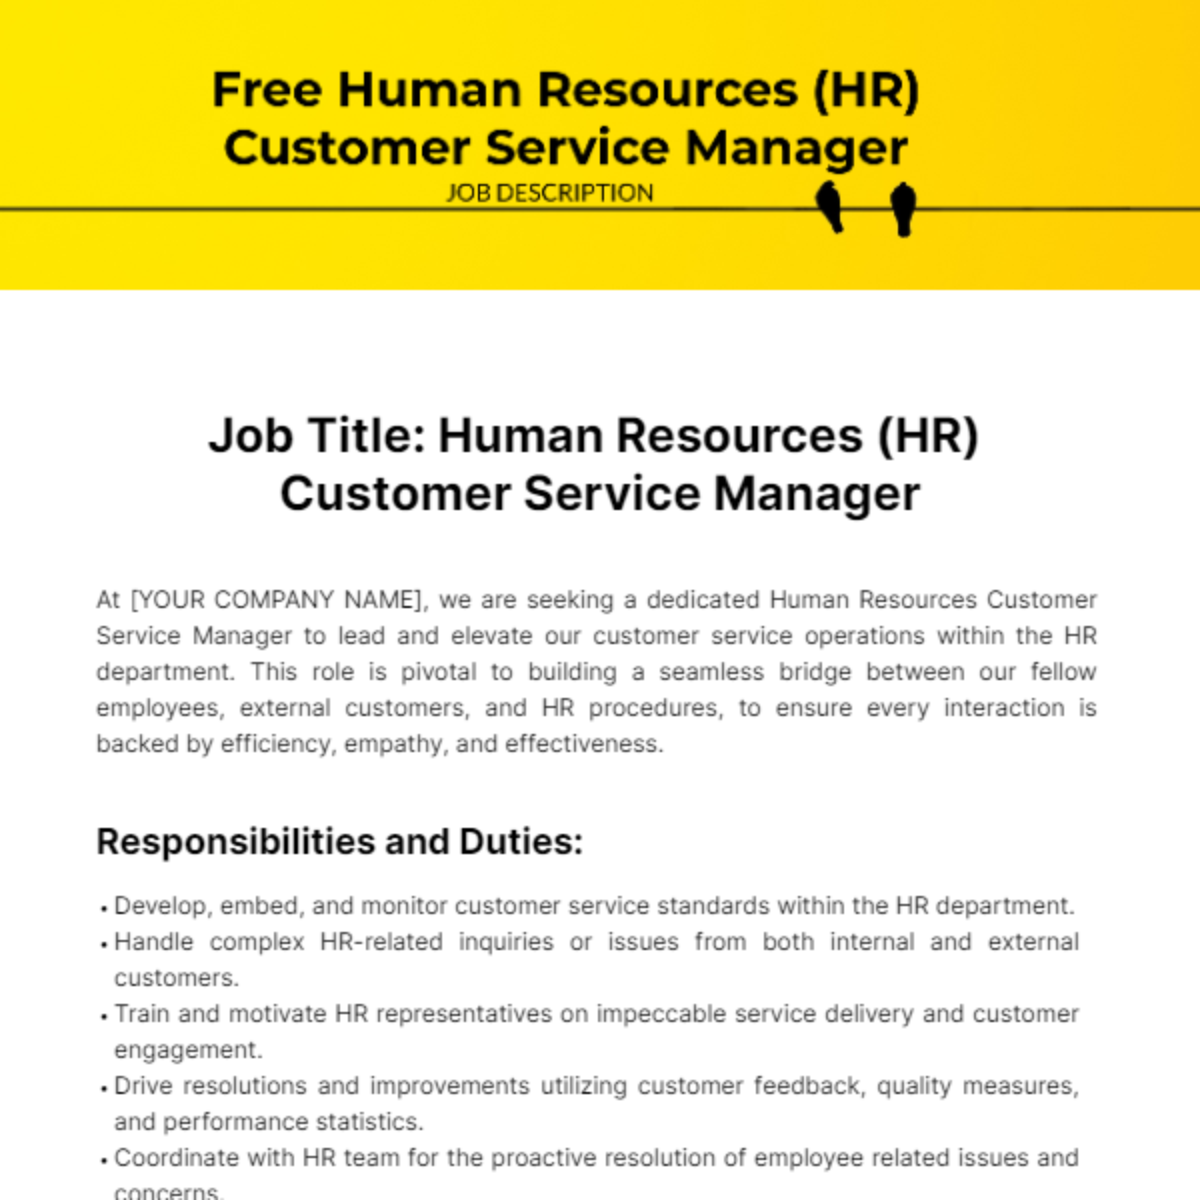 Human Resources (HR) Customer Service Manager Job Description Template